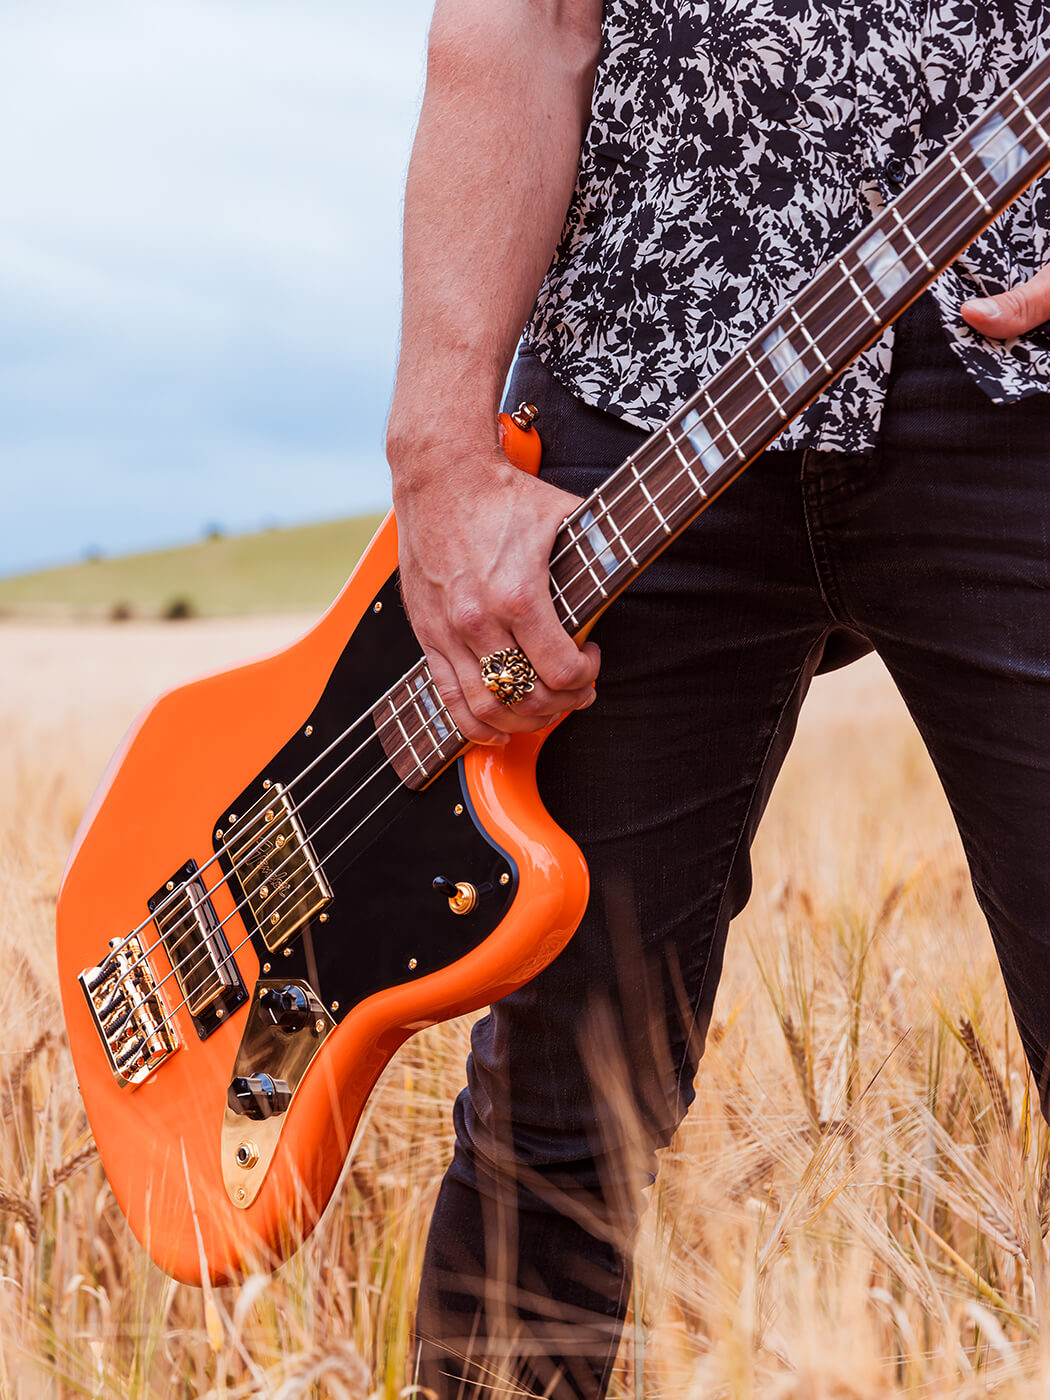 Mike Kerr holding his signature Fender Jaguar bass